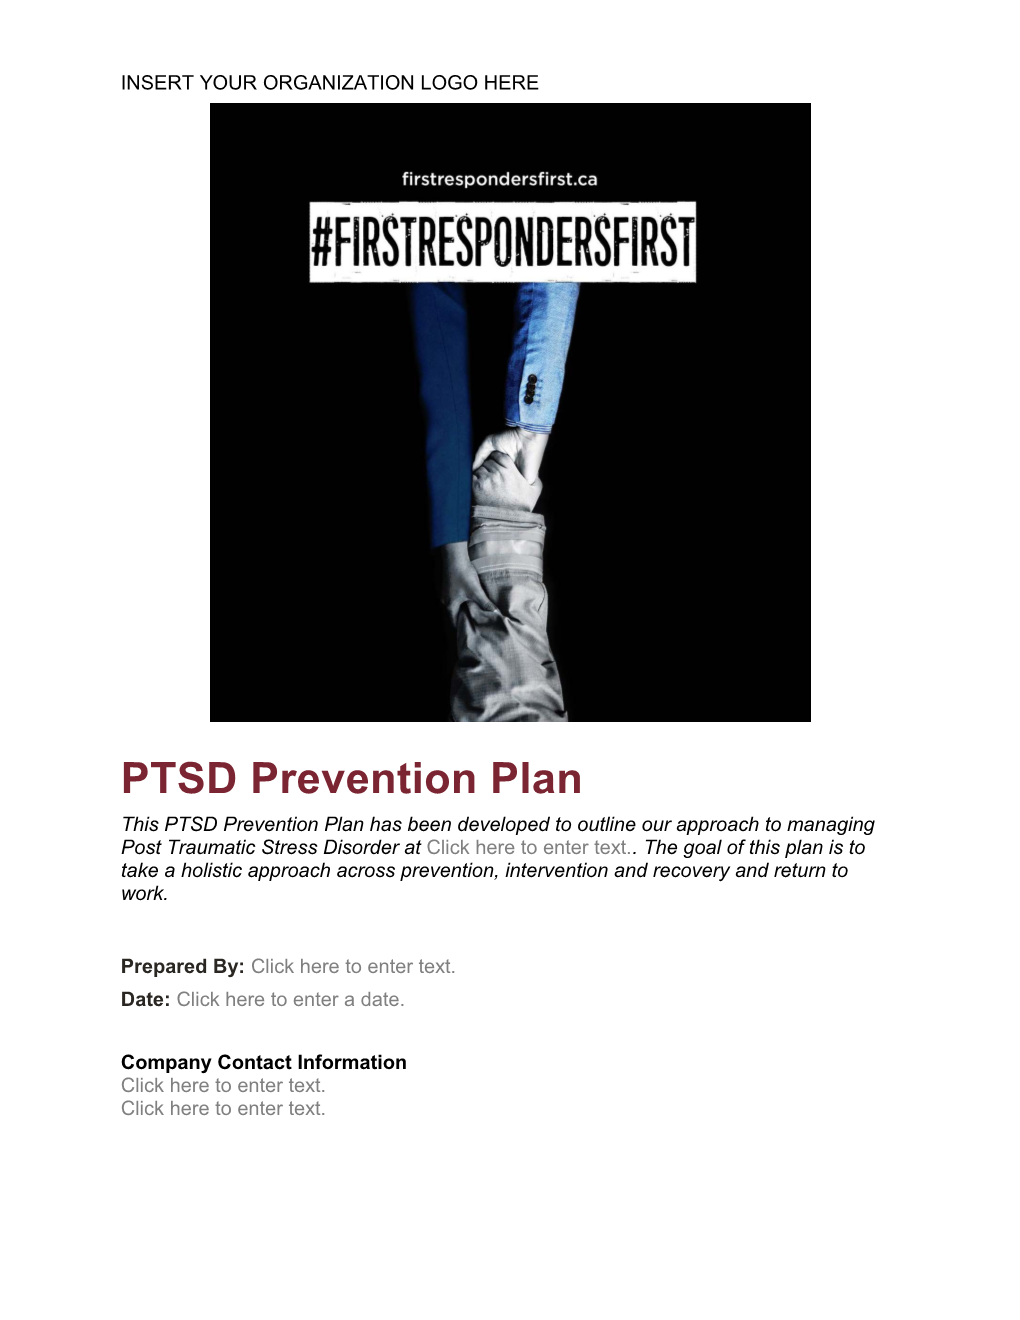 PTSD Prevention Plan